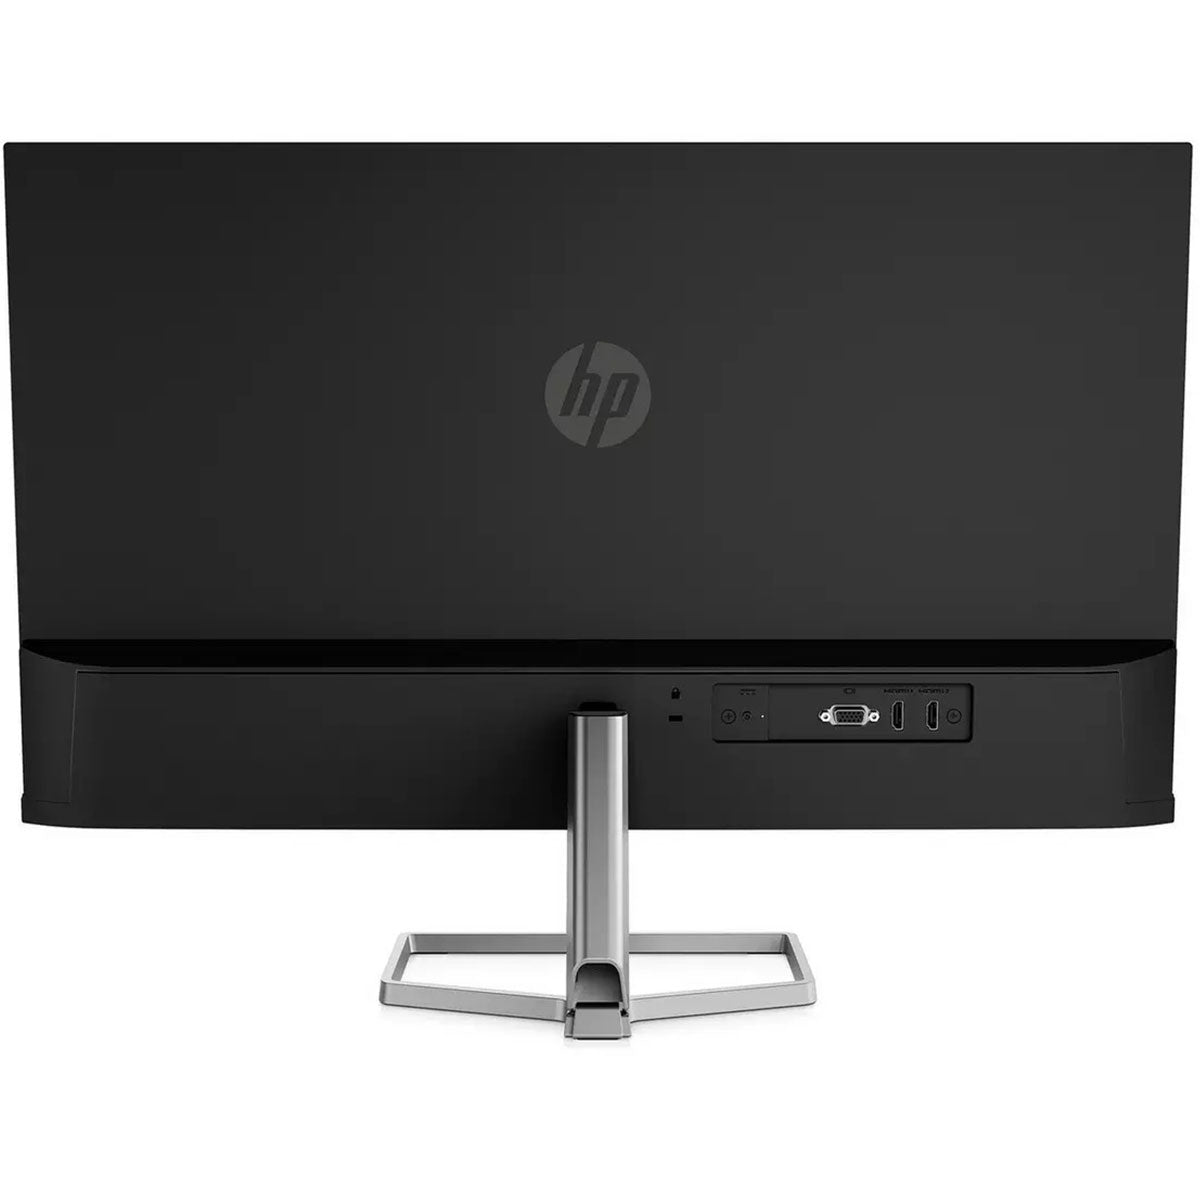 HP M27f 27" FHD ULTRA SLIM LED MONITOR, Black Color, Connectivity : VGA, 2*HDMI - Vertexhub Shop-HP